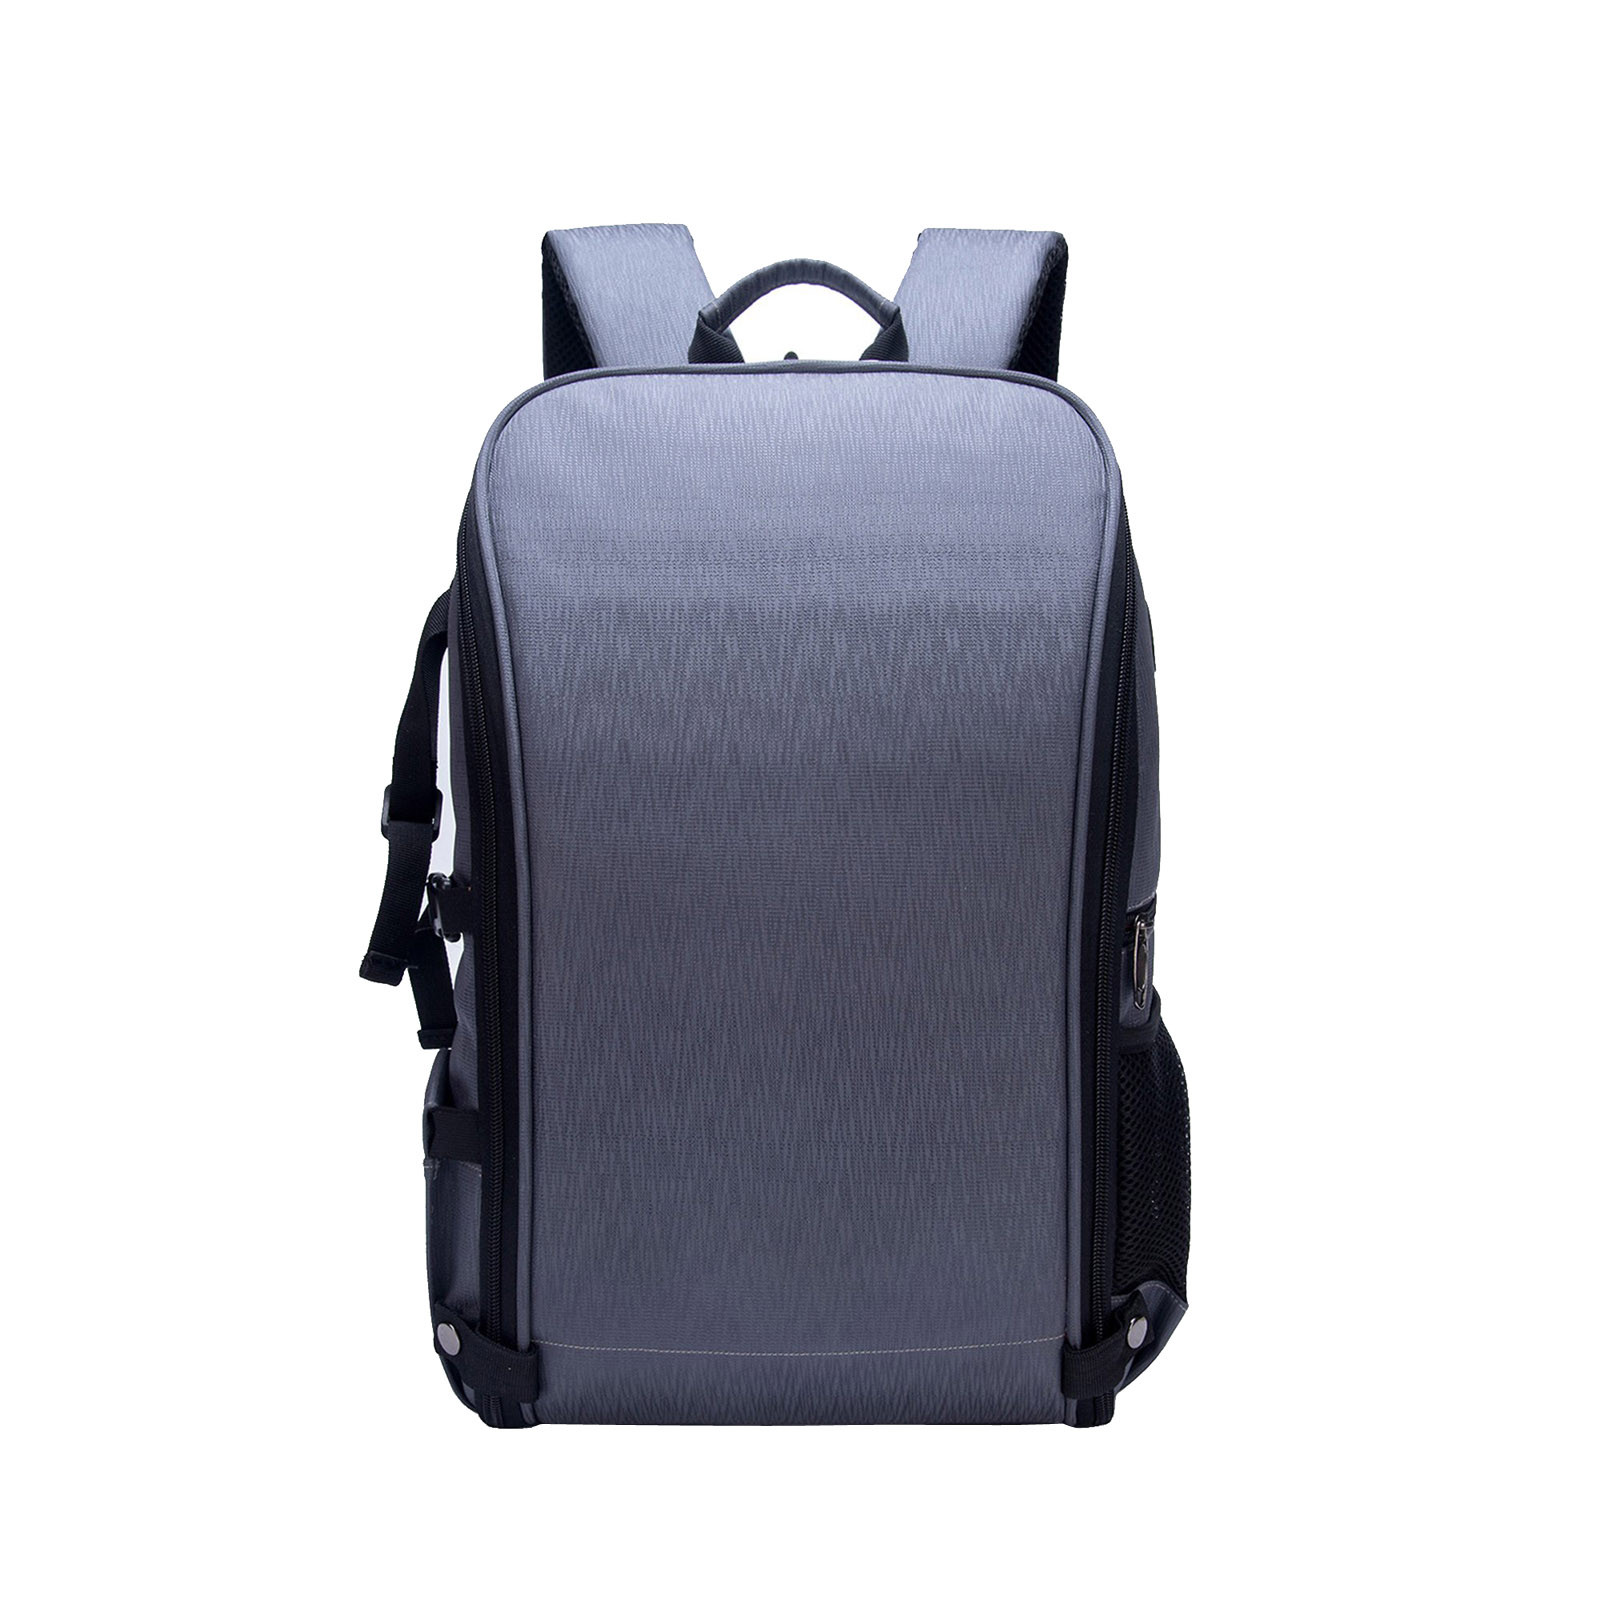 DJI FPV Combo Nylon Drone Backpack